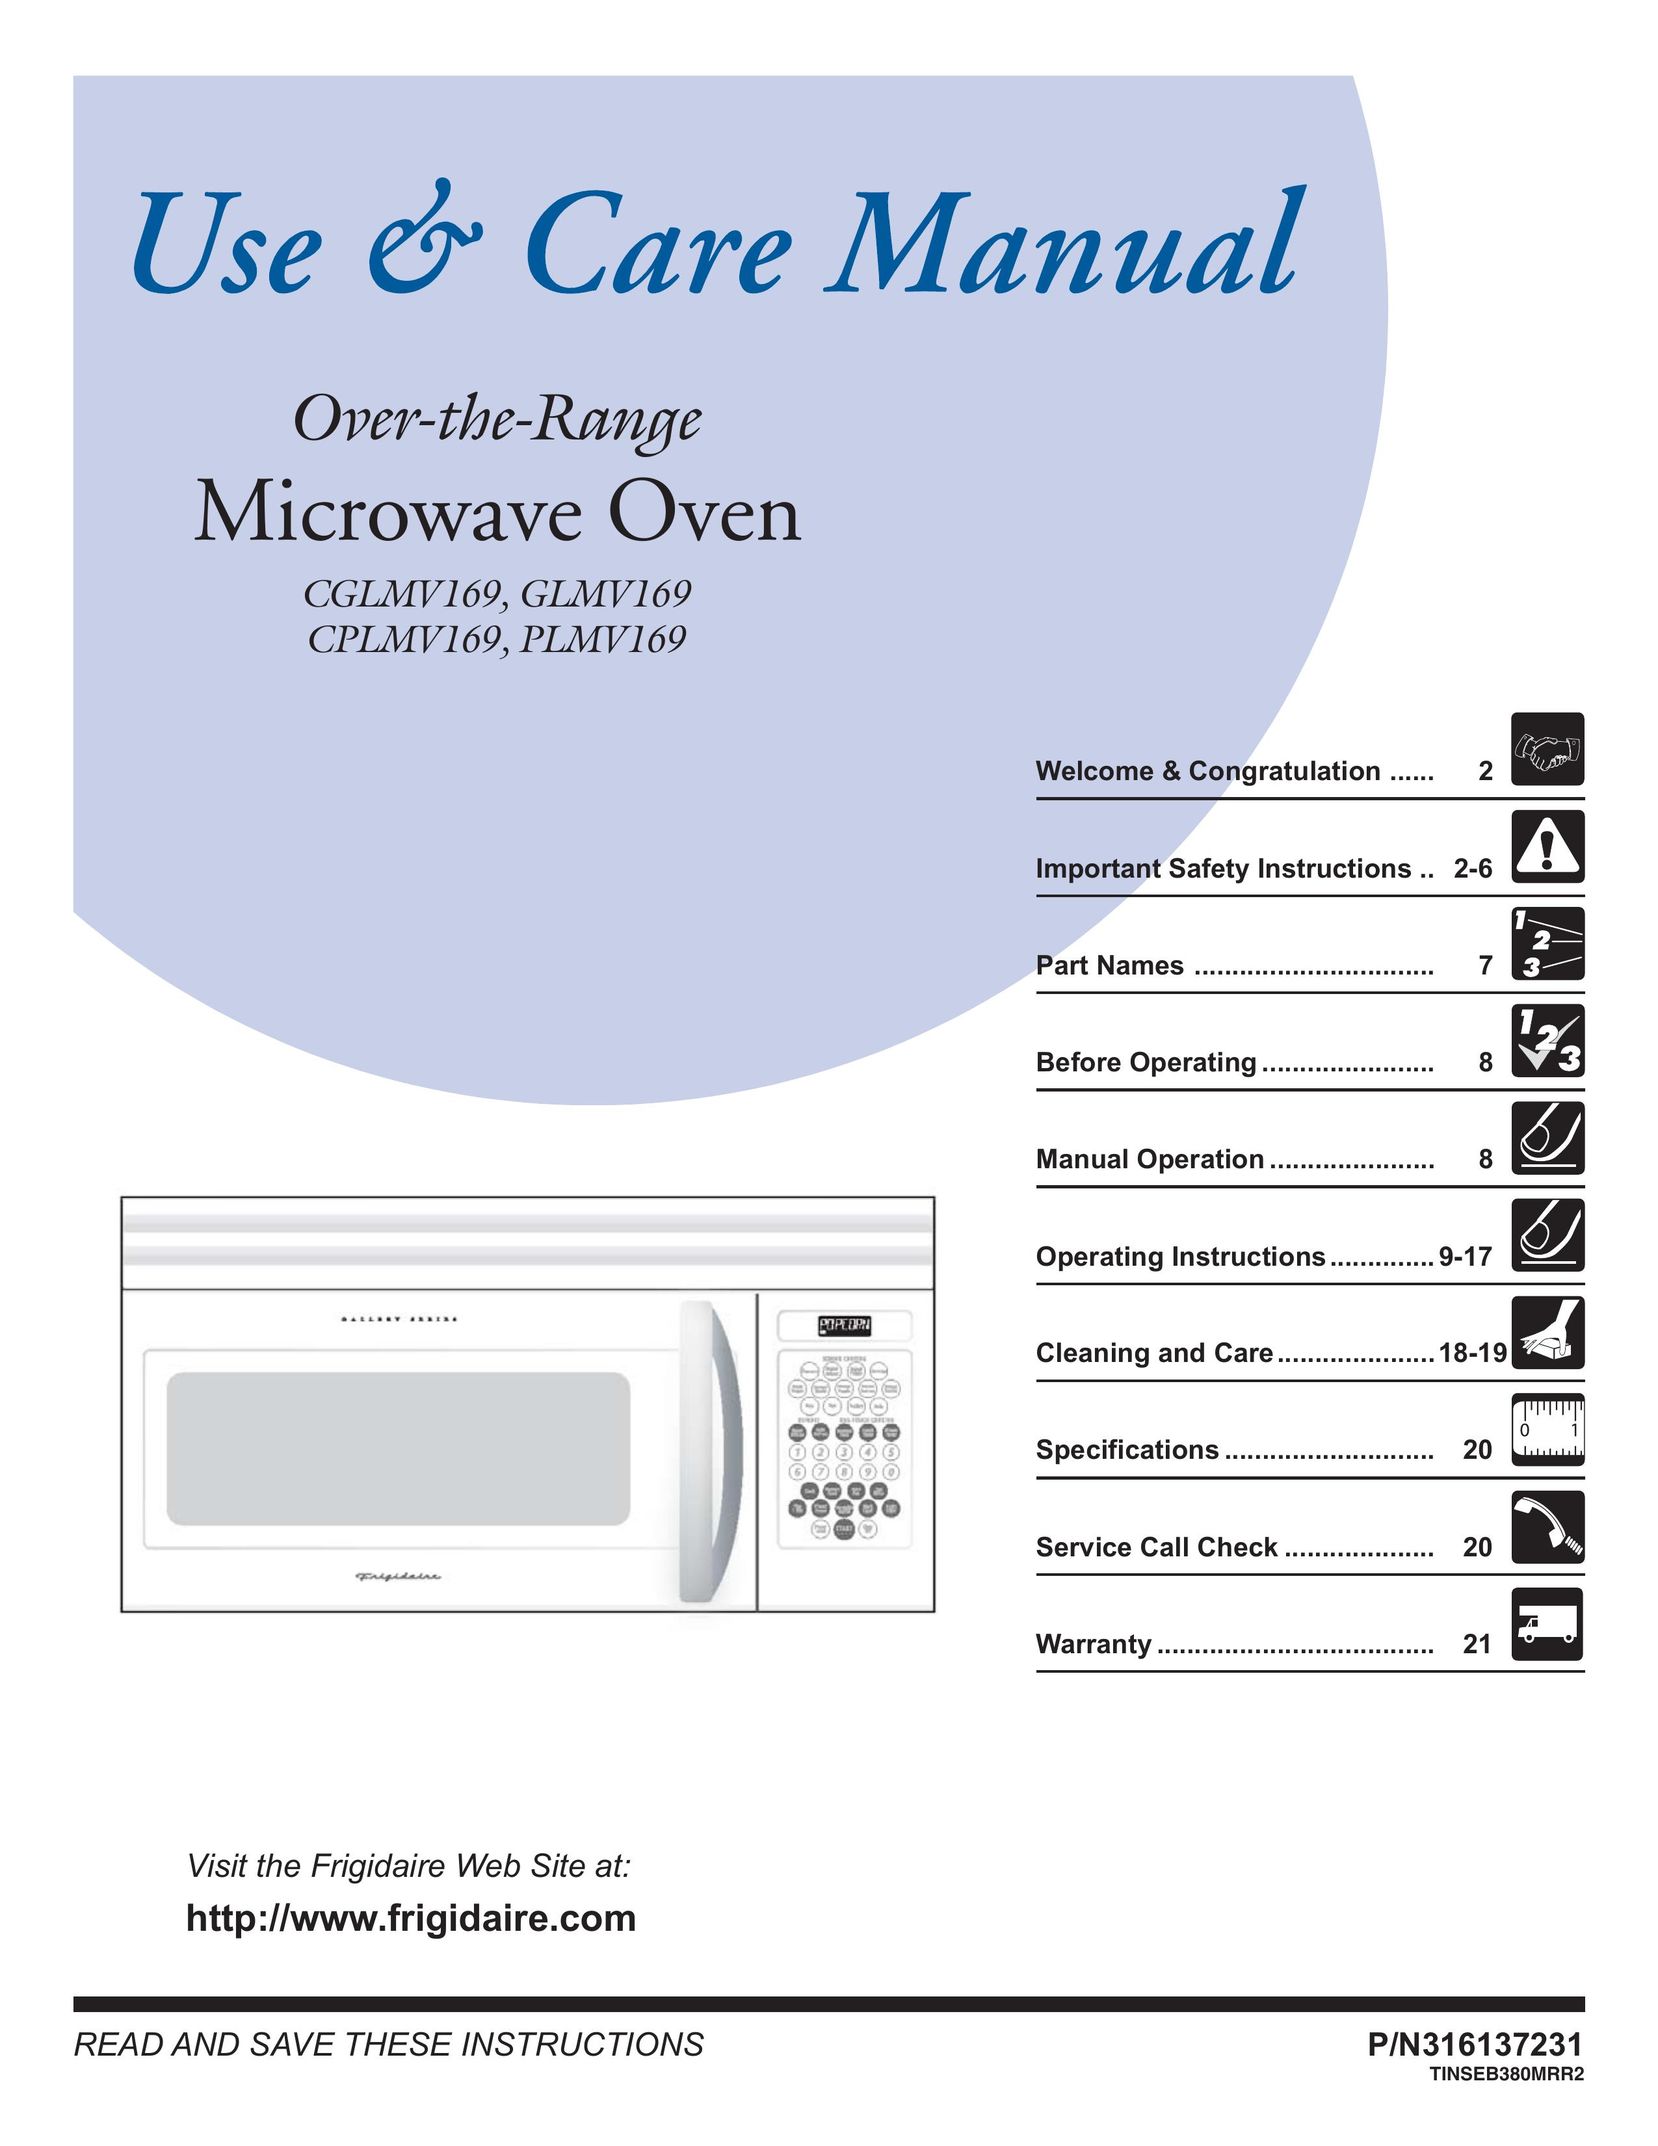 Frigidaire CGLMV169, GLMV169, CPMLV169, PLMV169 Microwave Oven User Manual